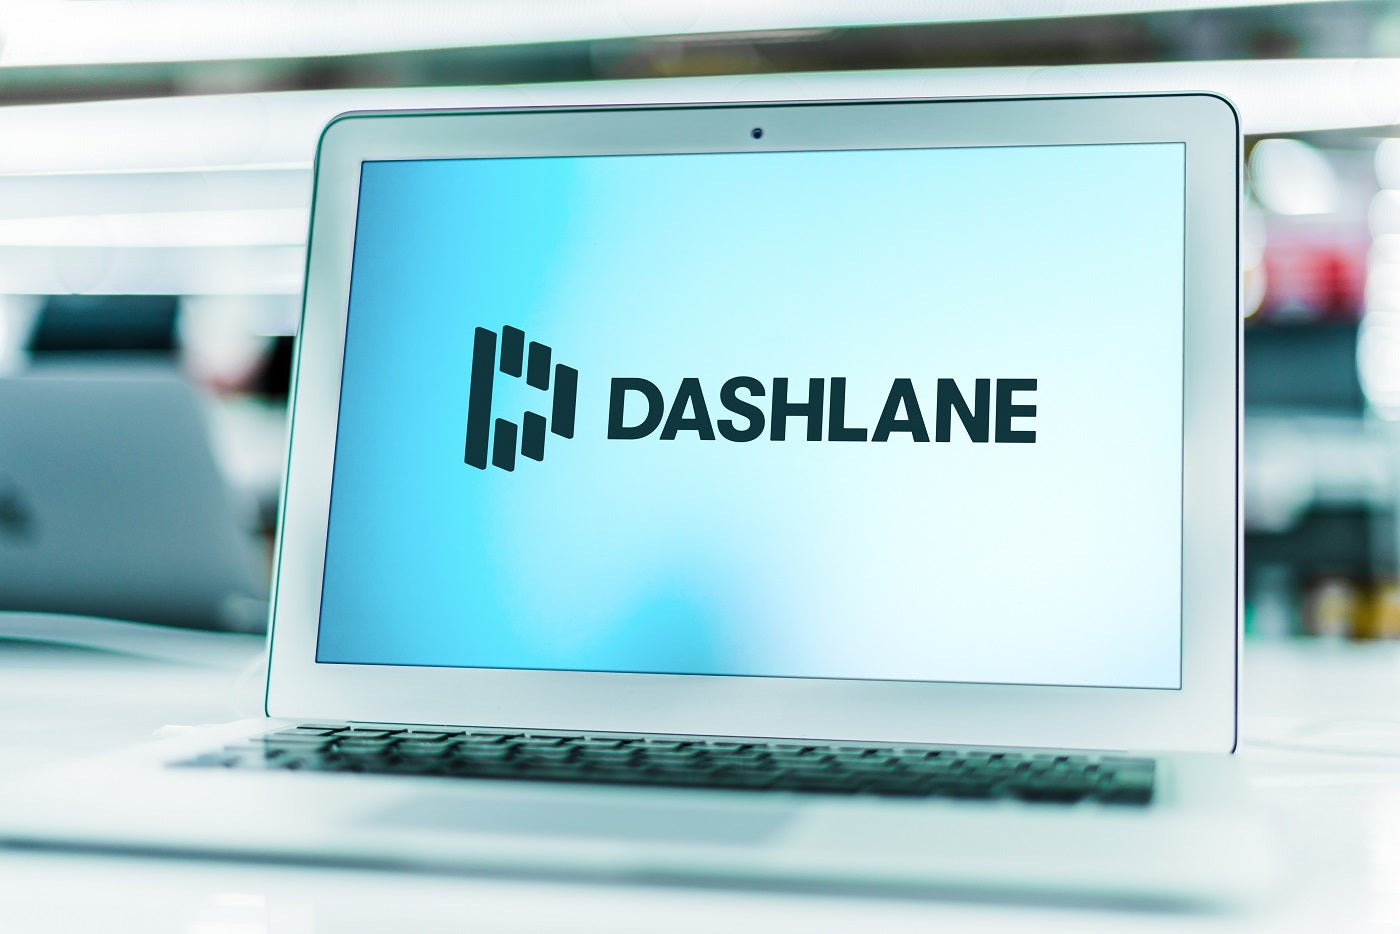 Dashlane Password Manager software on laptop.